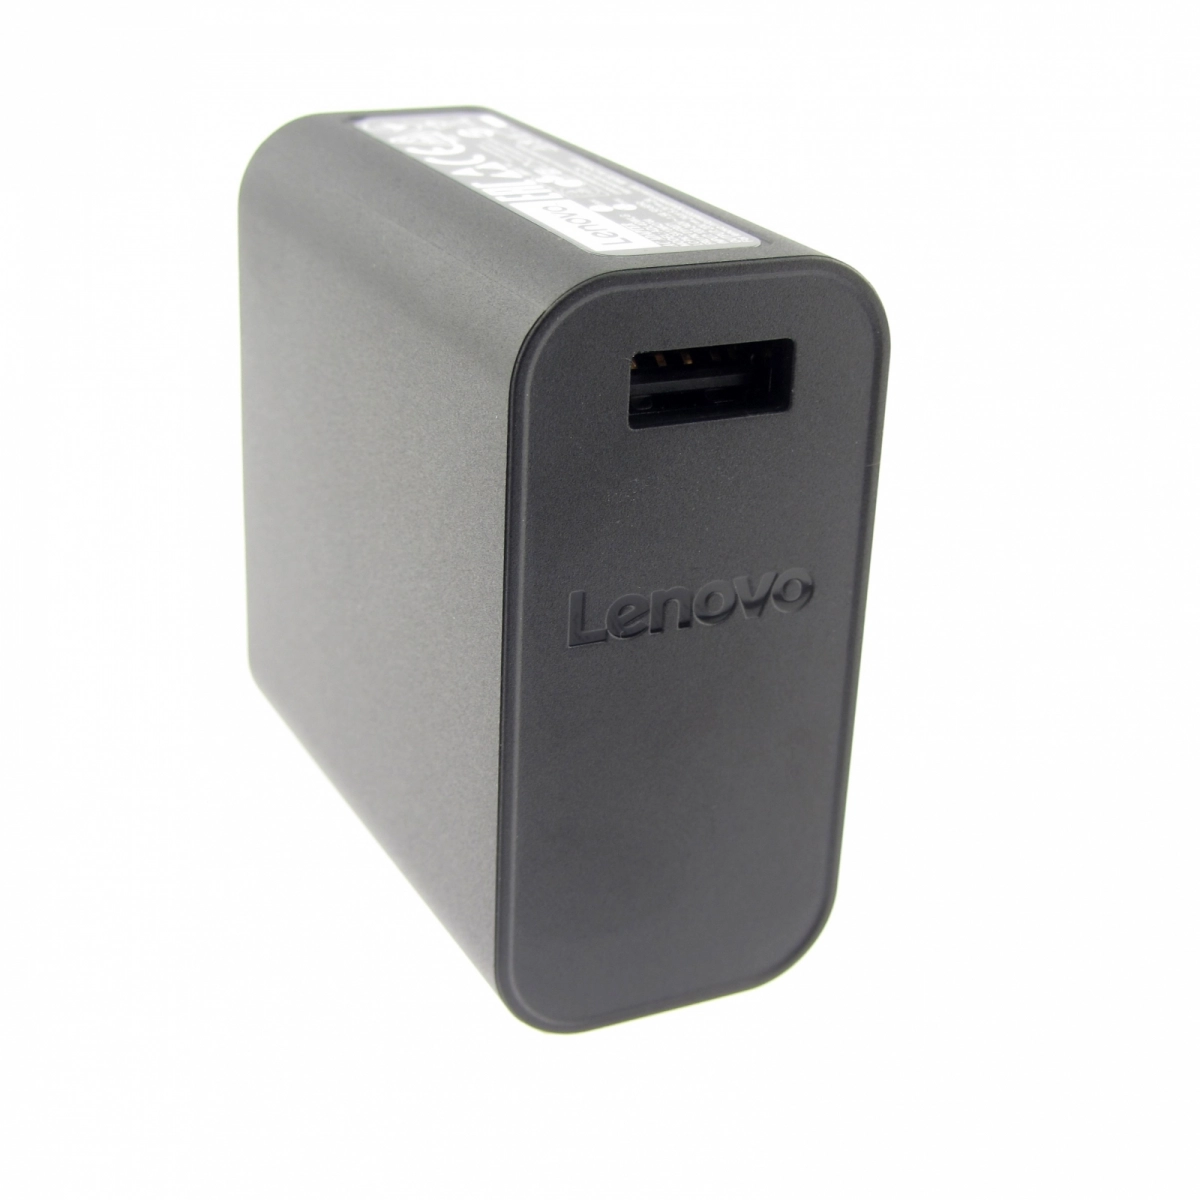 Original Netzteil für LENOVO ADL40WCF 36200584, 20V, 2A, Stecker USB, ohne USB-Kabel